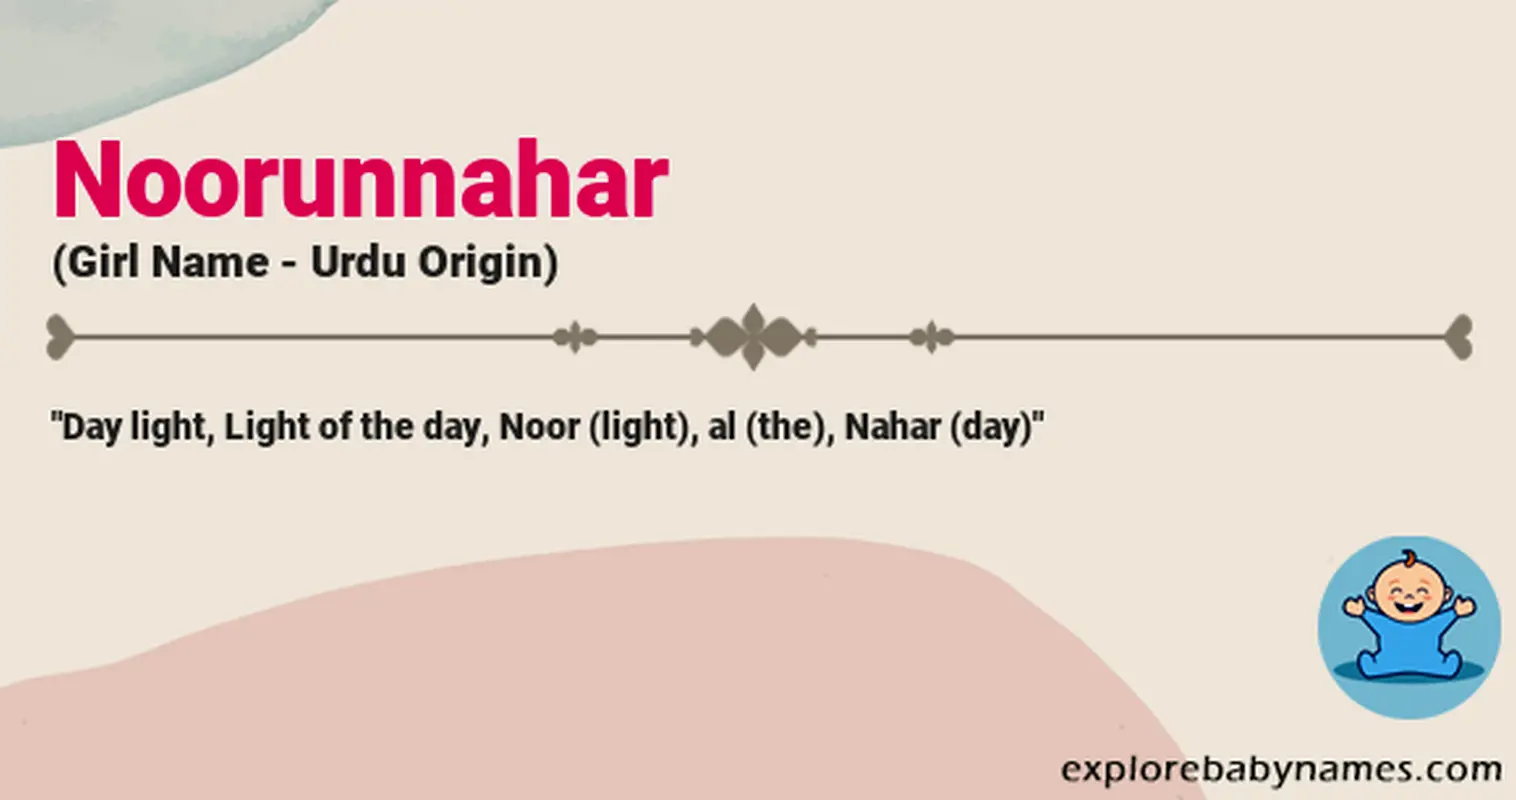 Meaning of Noorunnahar